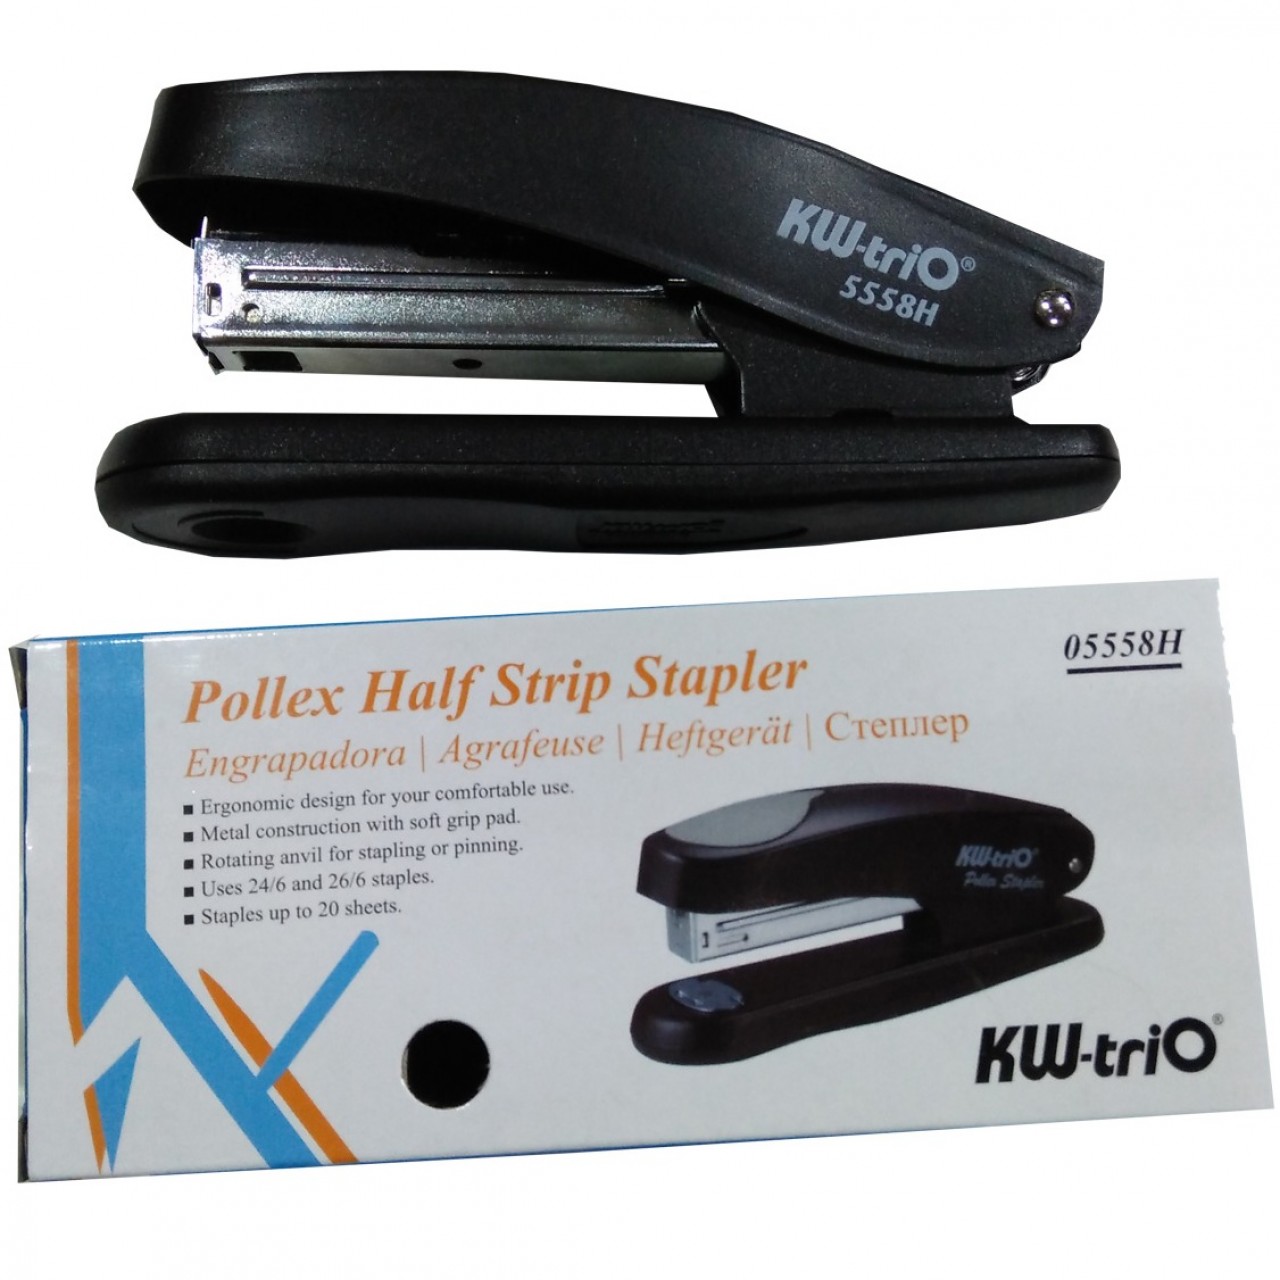 Pollex KW-trio 5558H Half Strip Stapler For Office Use